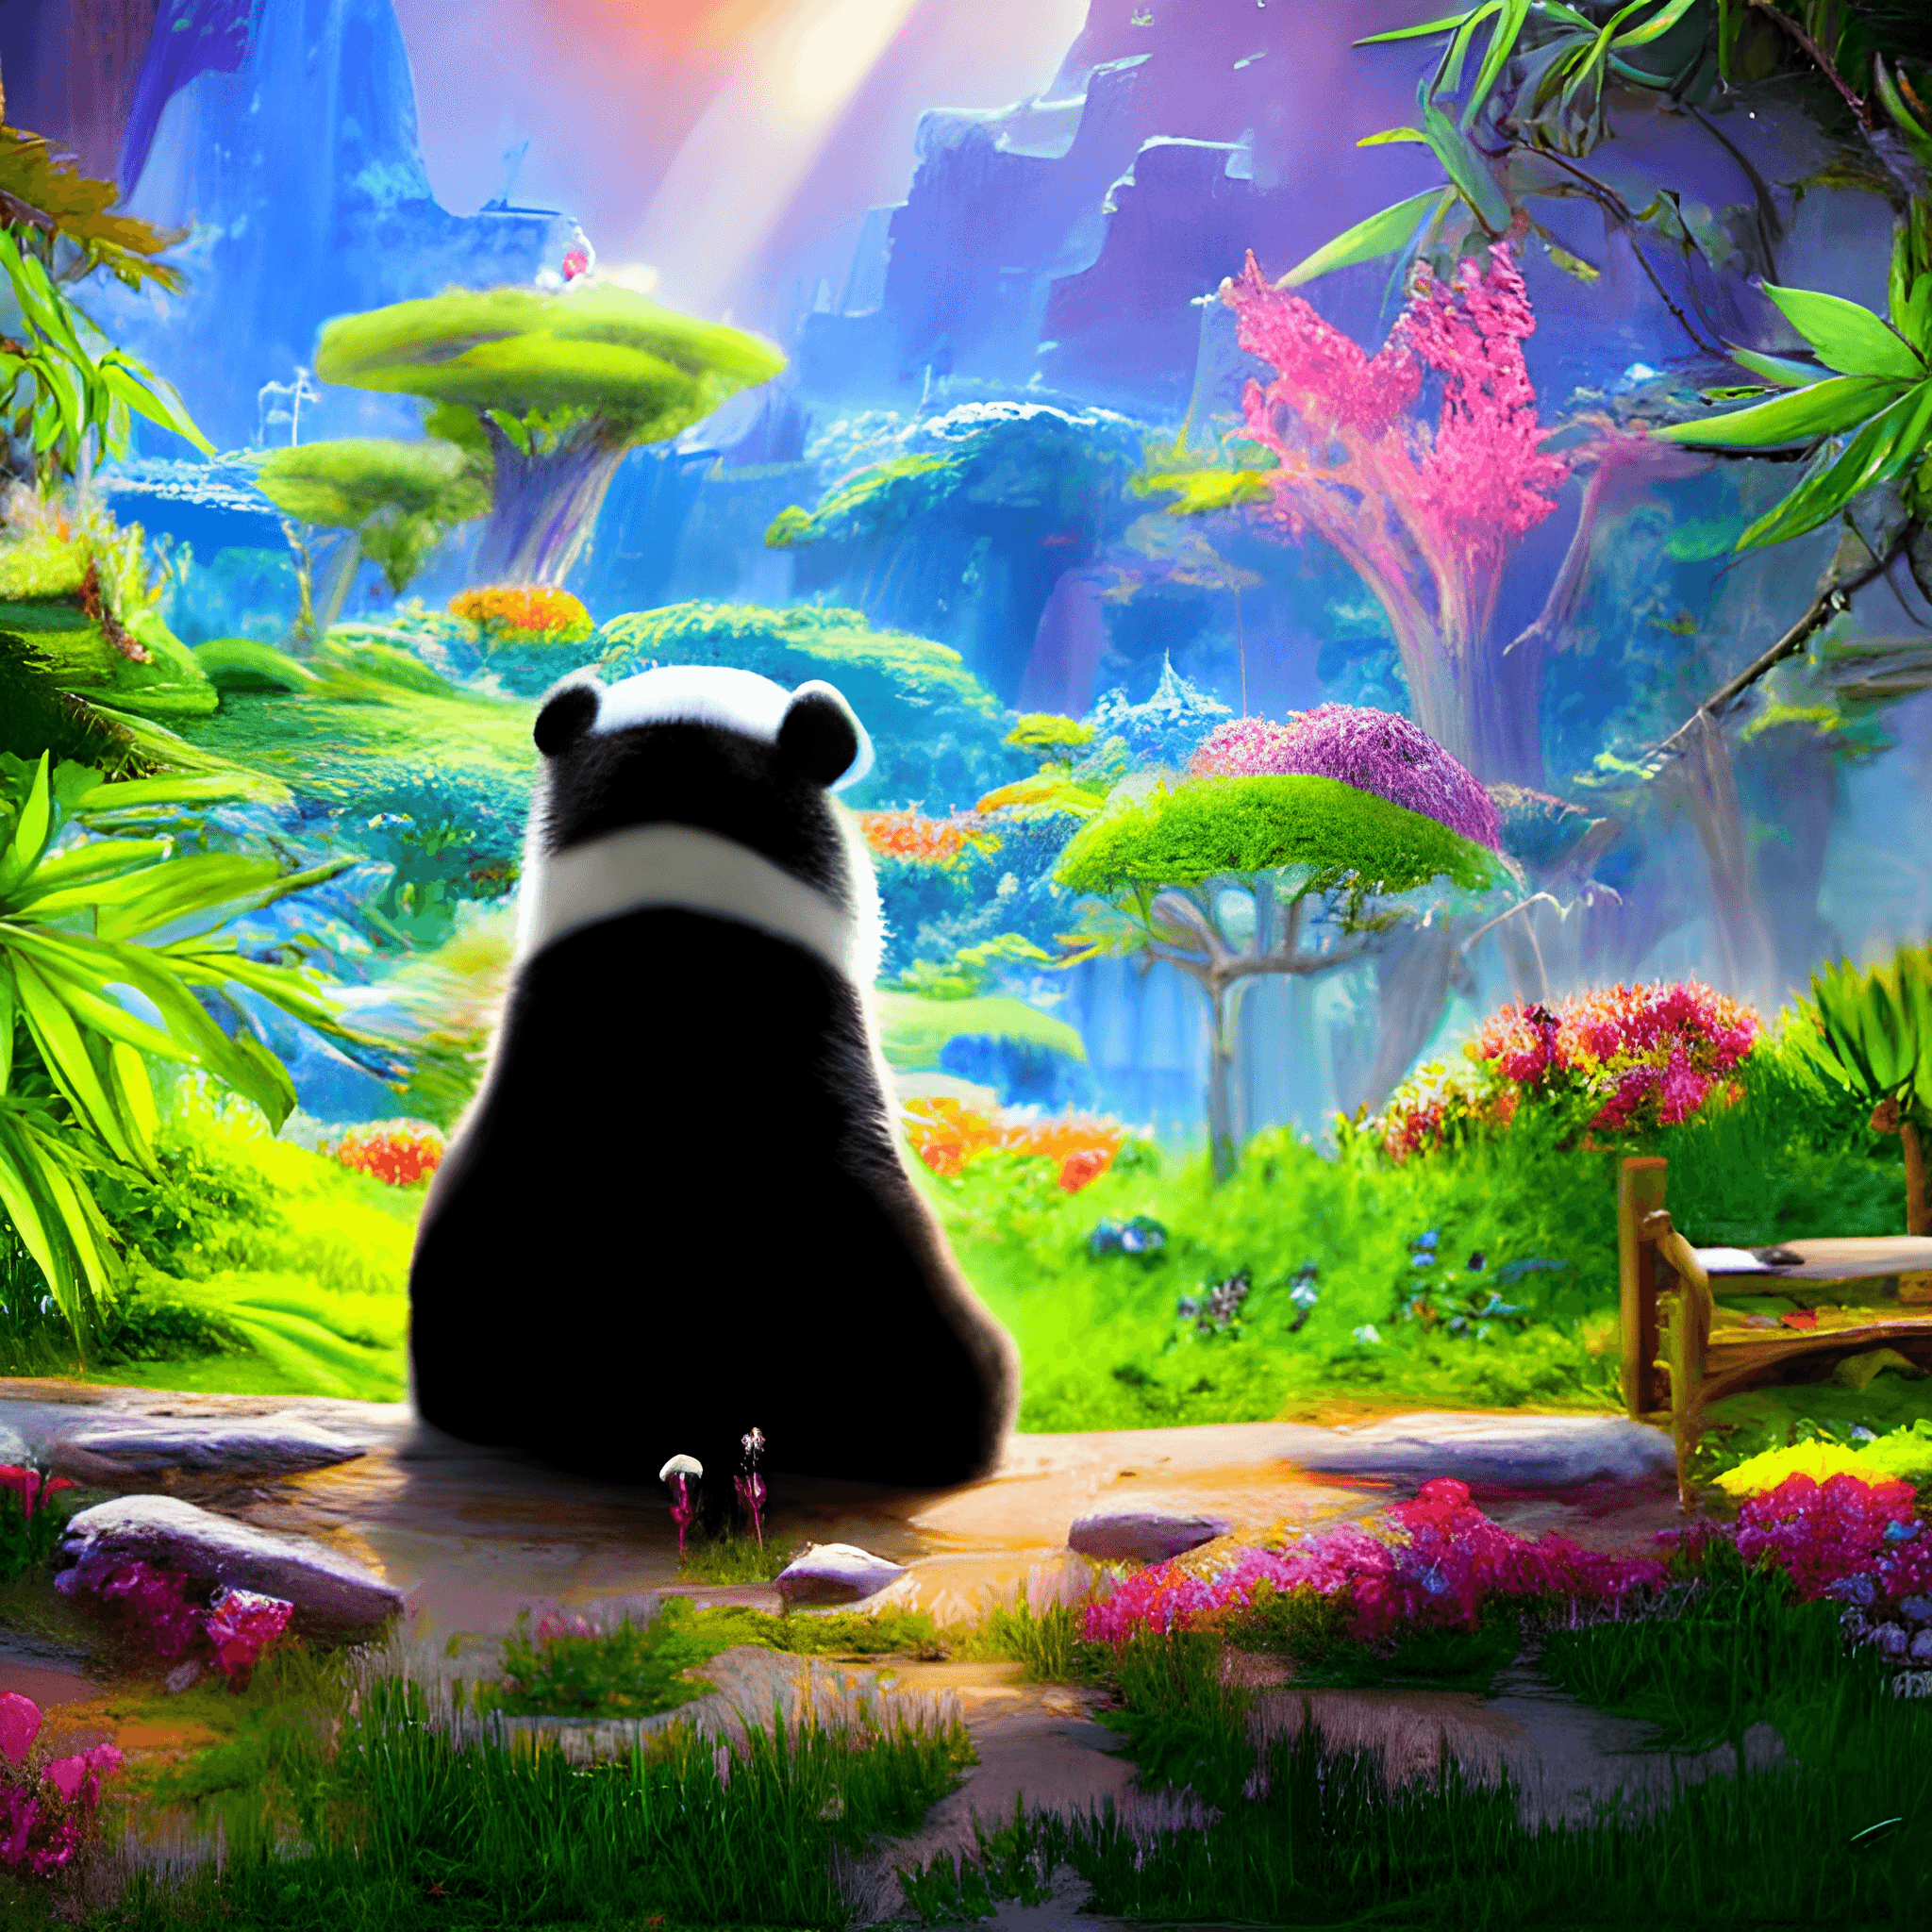 panda's journey #day.27